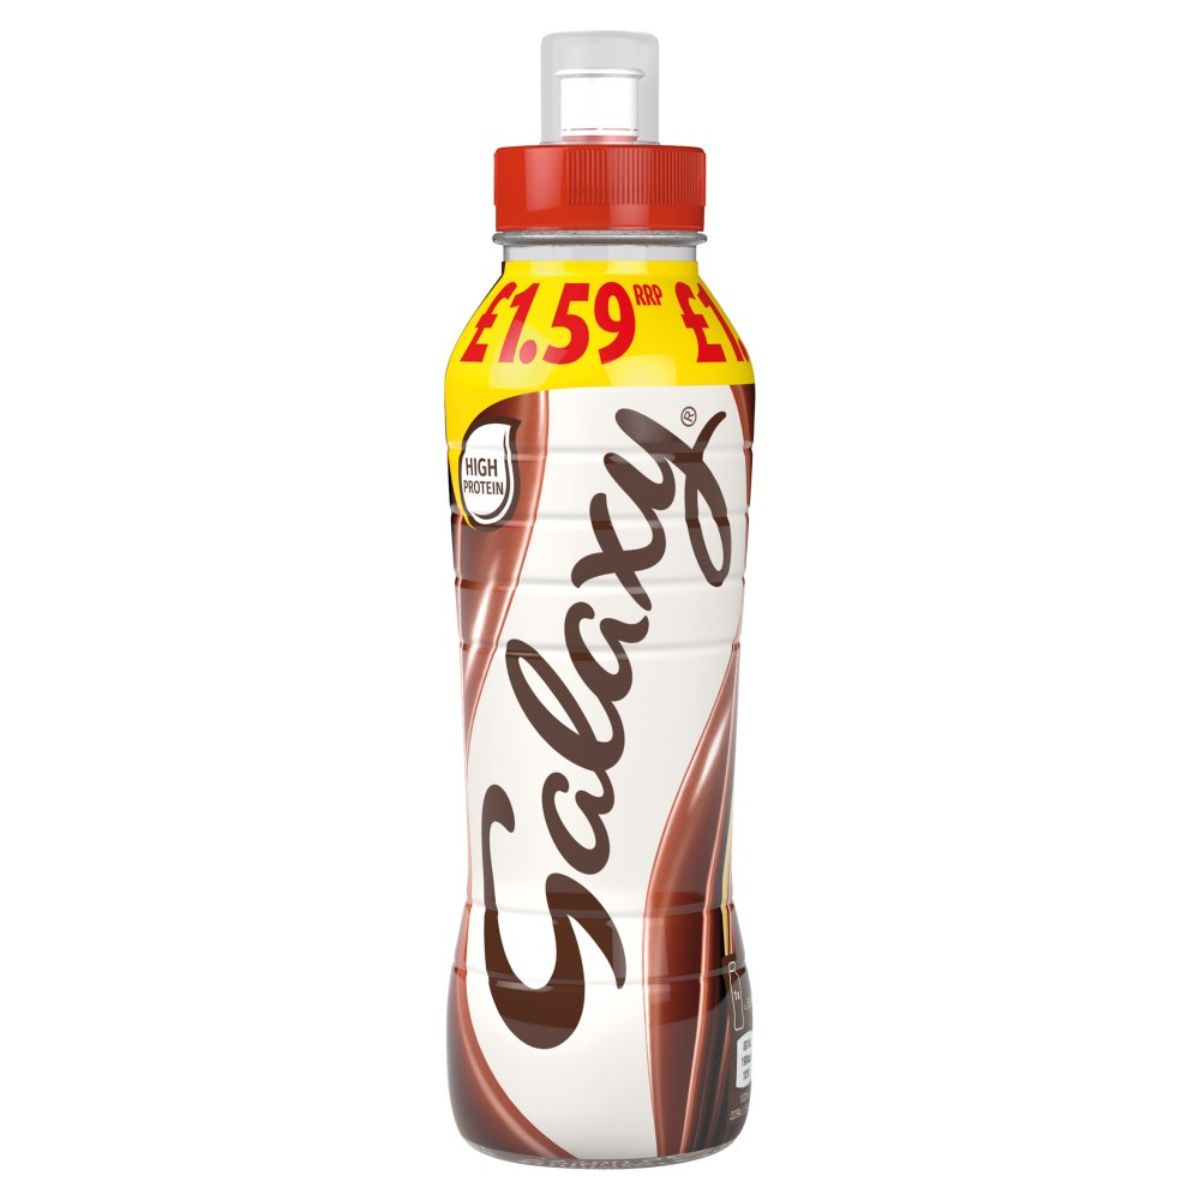 A bottle of Galaxy - Chocolate Milkshake Drink - 350ml on a white background.